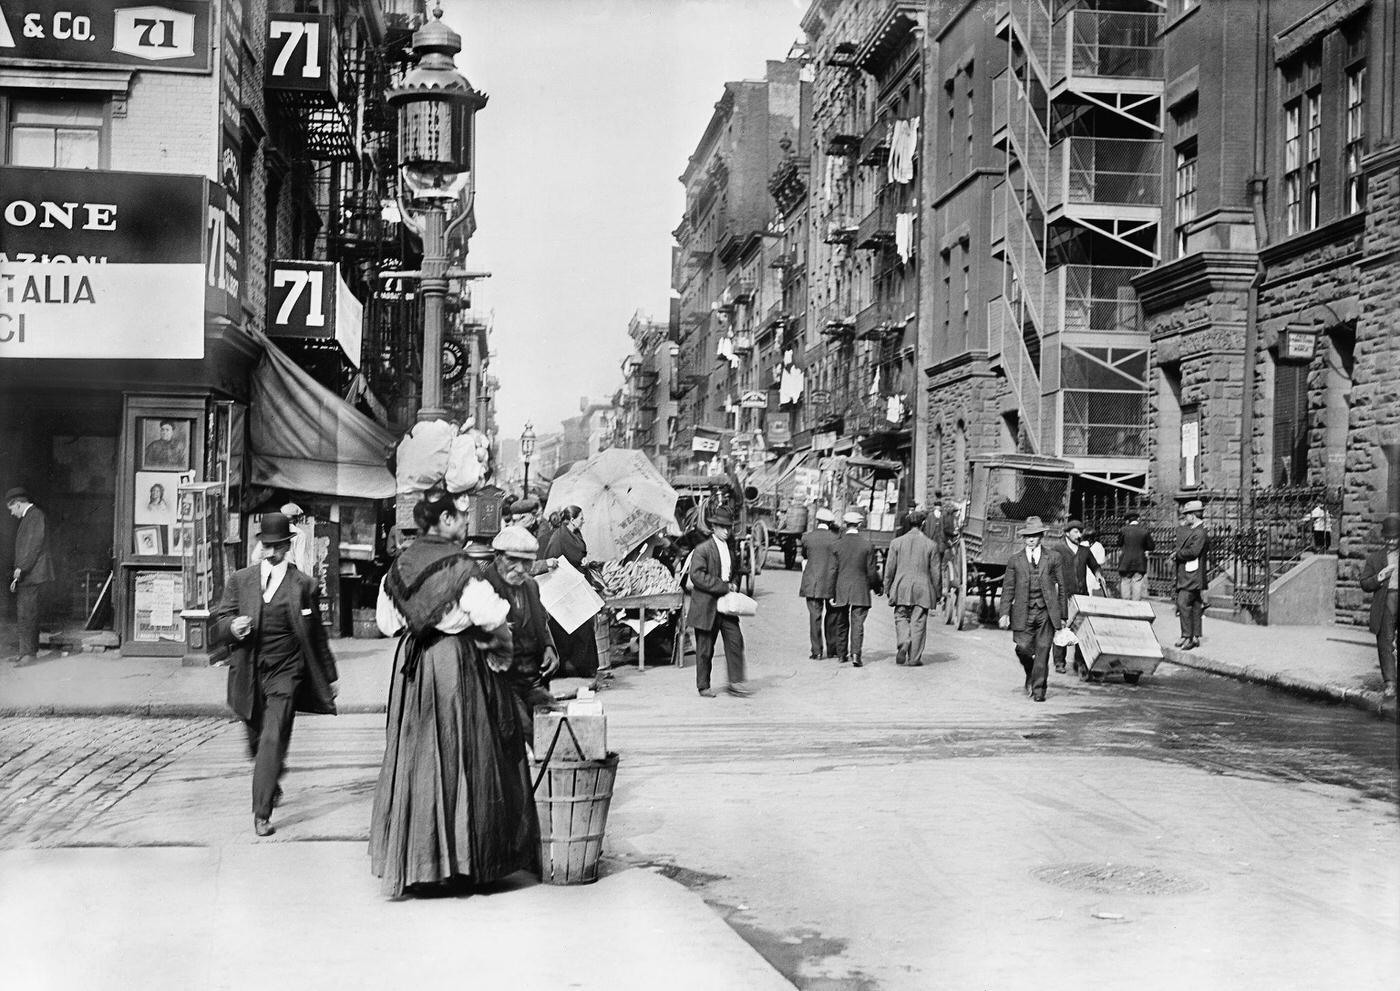 Mulberry Street, New York City, 1900